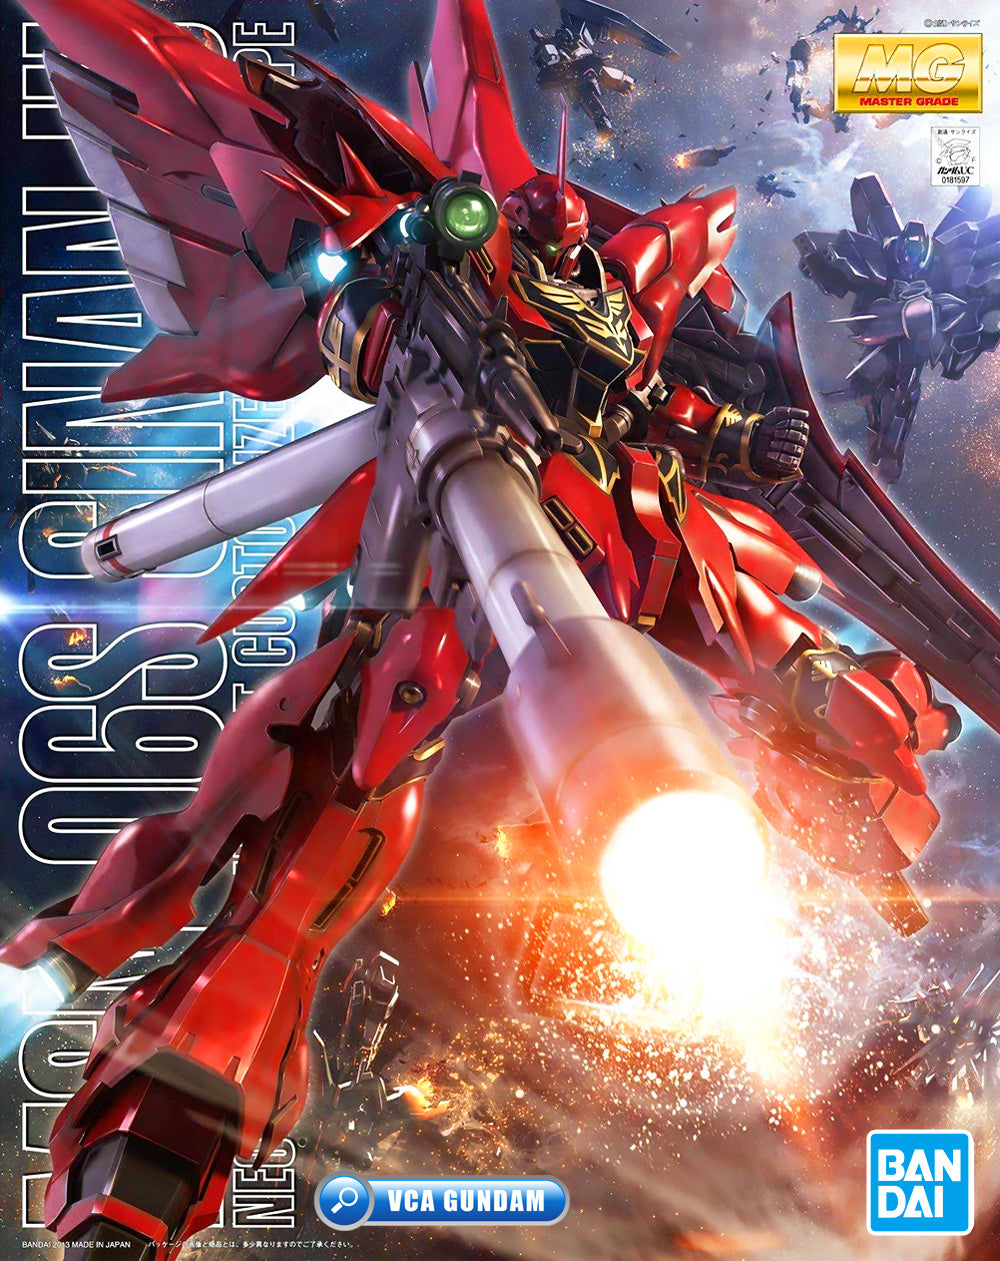 Bandai Gunpla Master Grade 1/100 MG MSN-06S Sinanju Ver OVA Plastic Model Kit Toy VCA Gundam Singapore